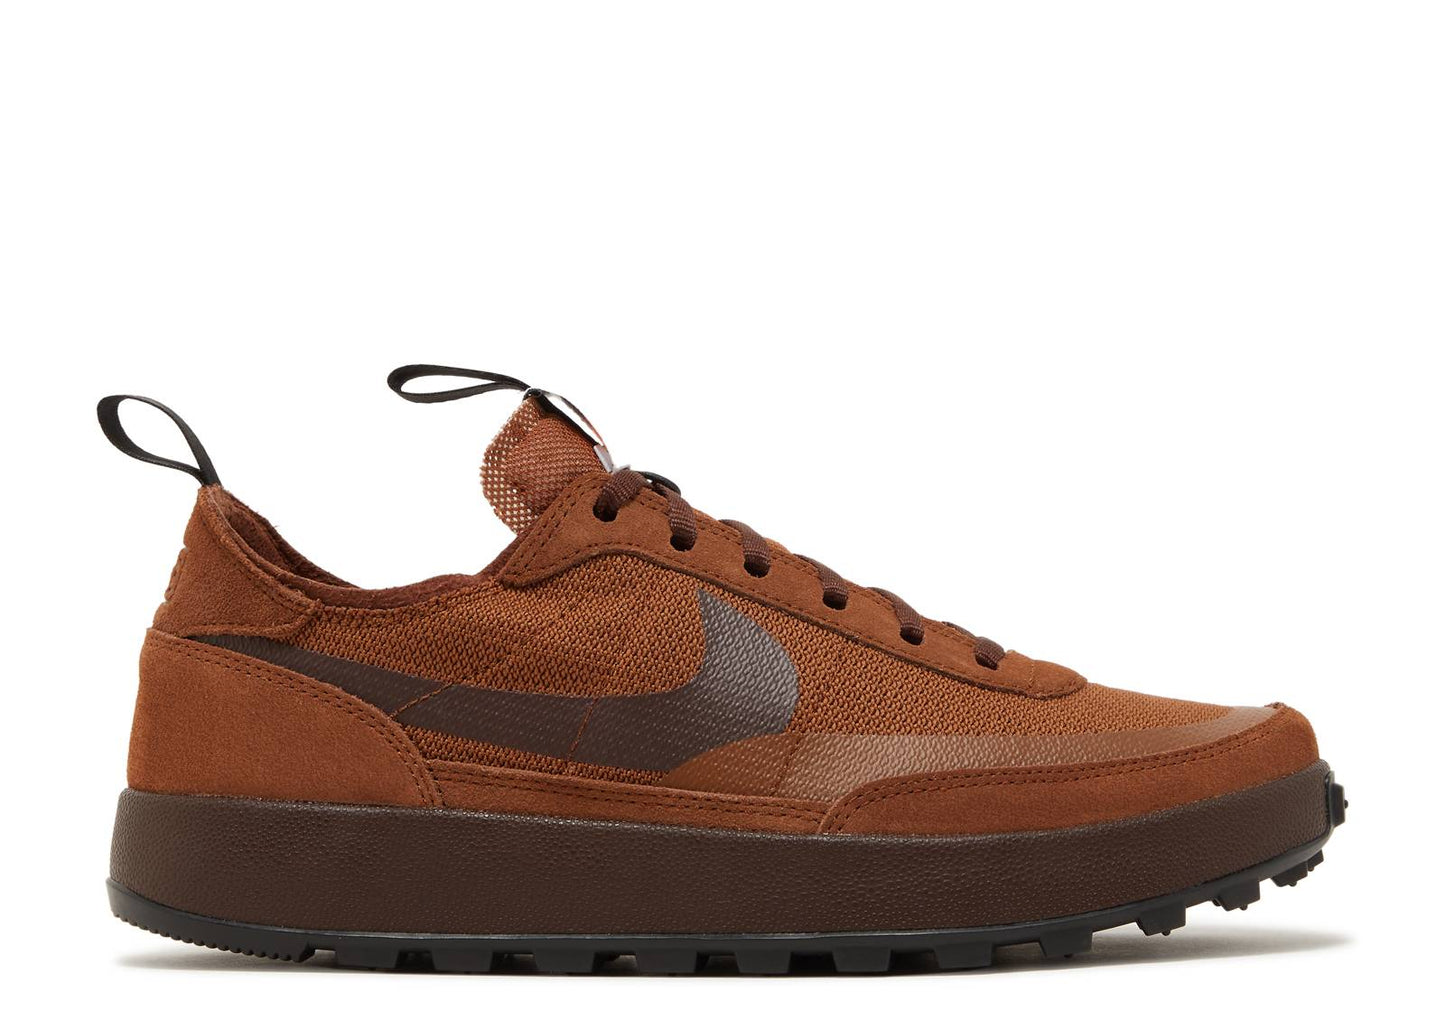 Tom Sachs X Nike Craft General Purpose Shoe 'Brown'